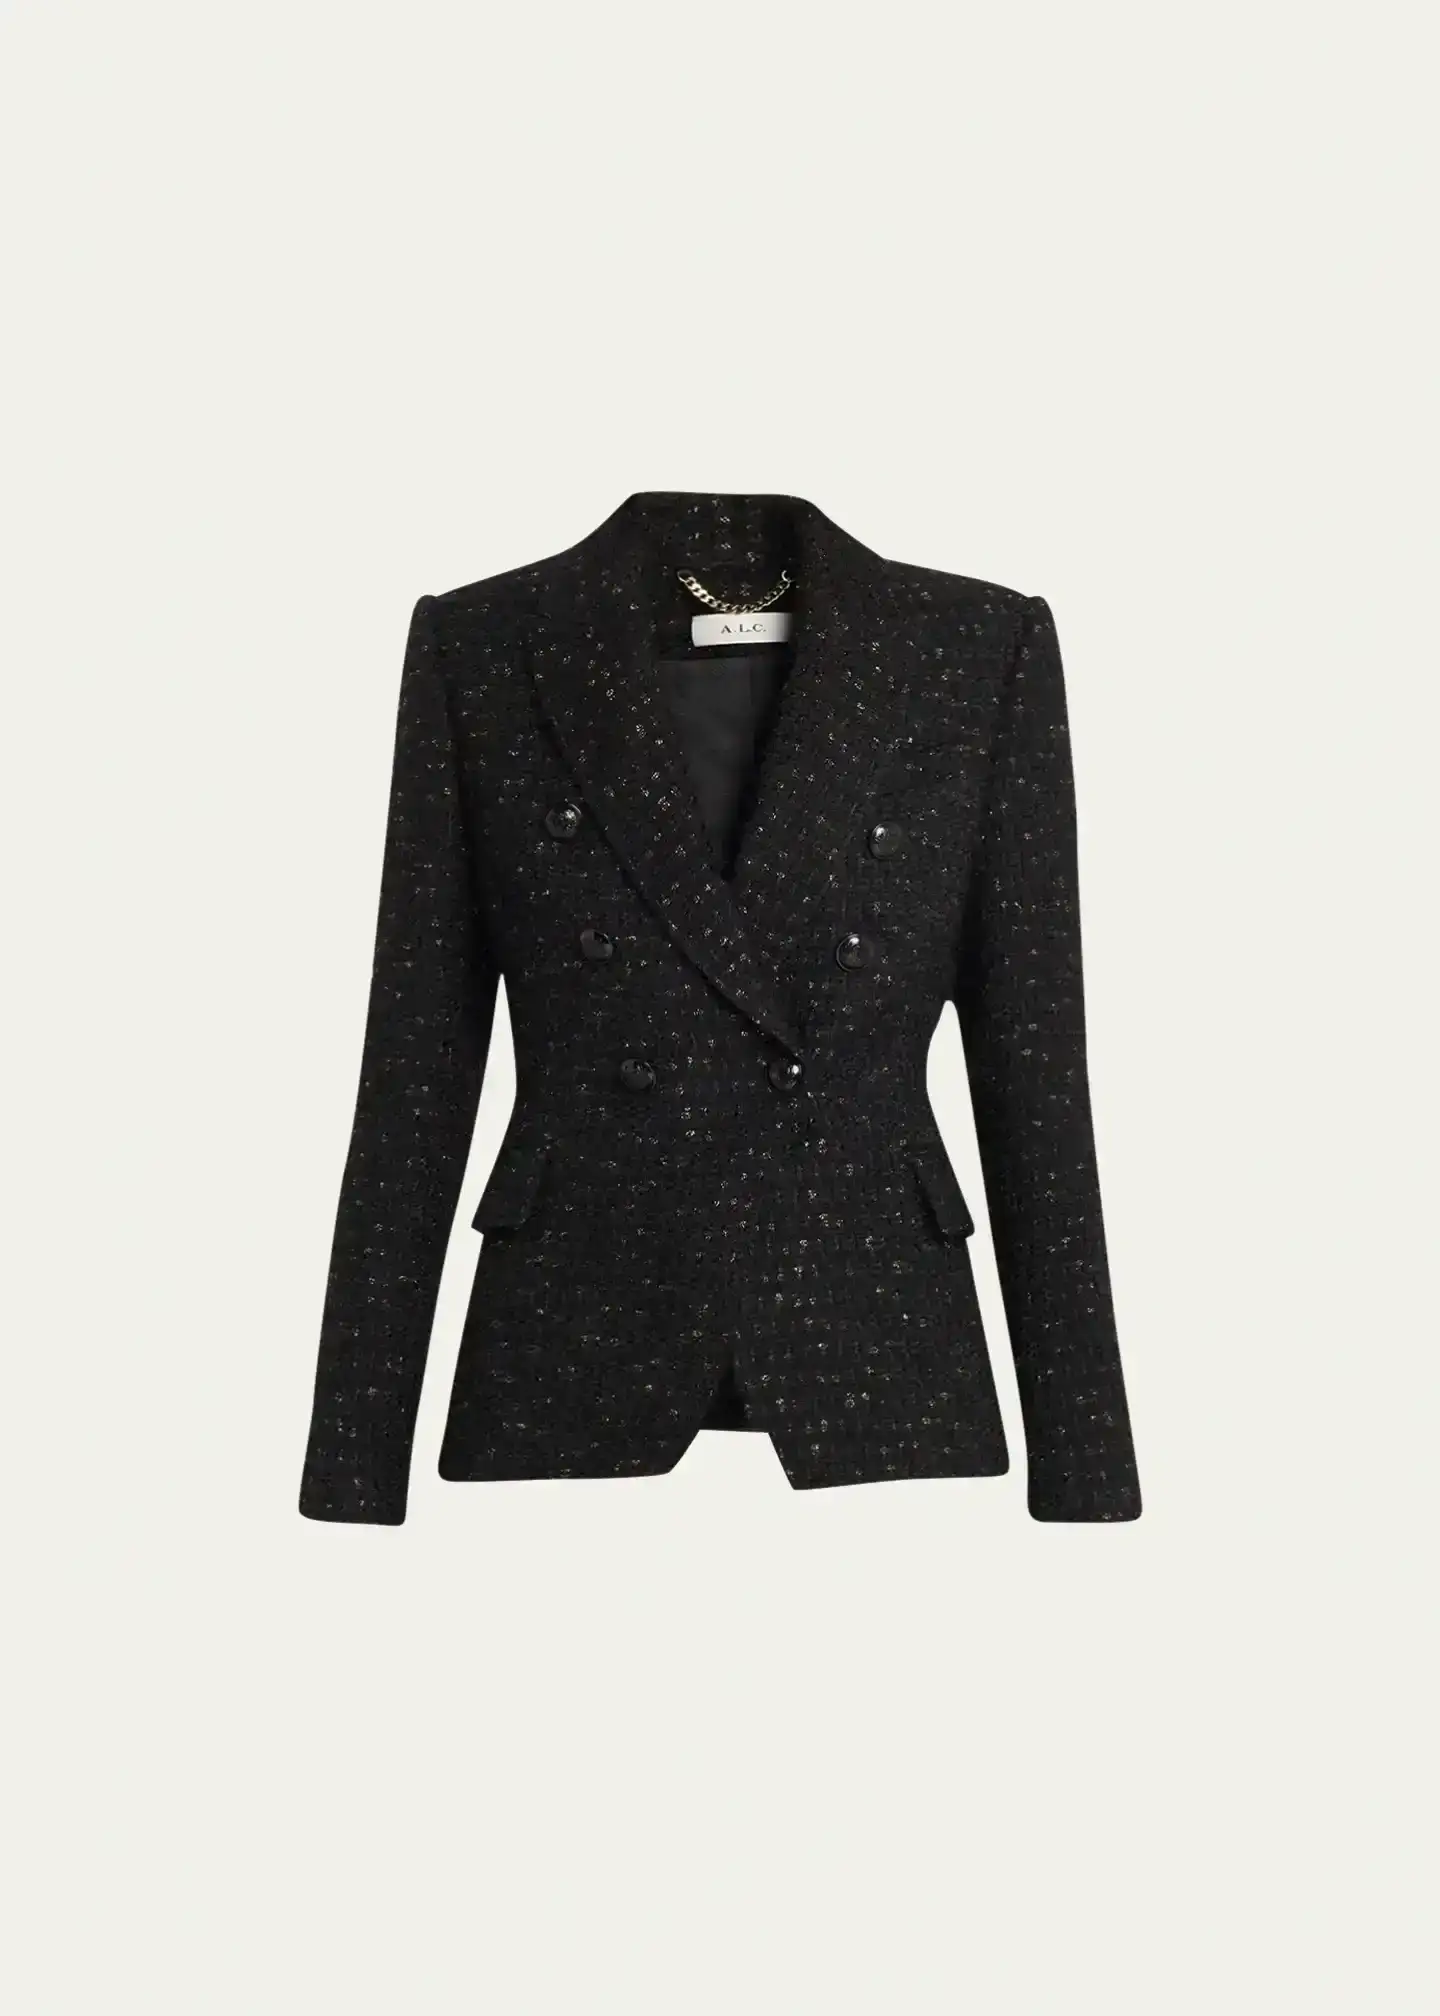 Chelsea Tweed Tailored Jacket